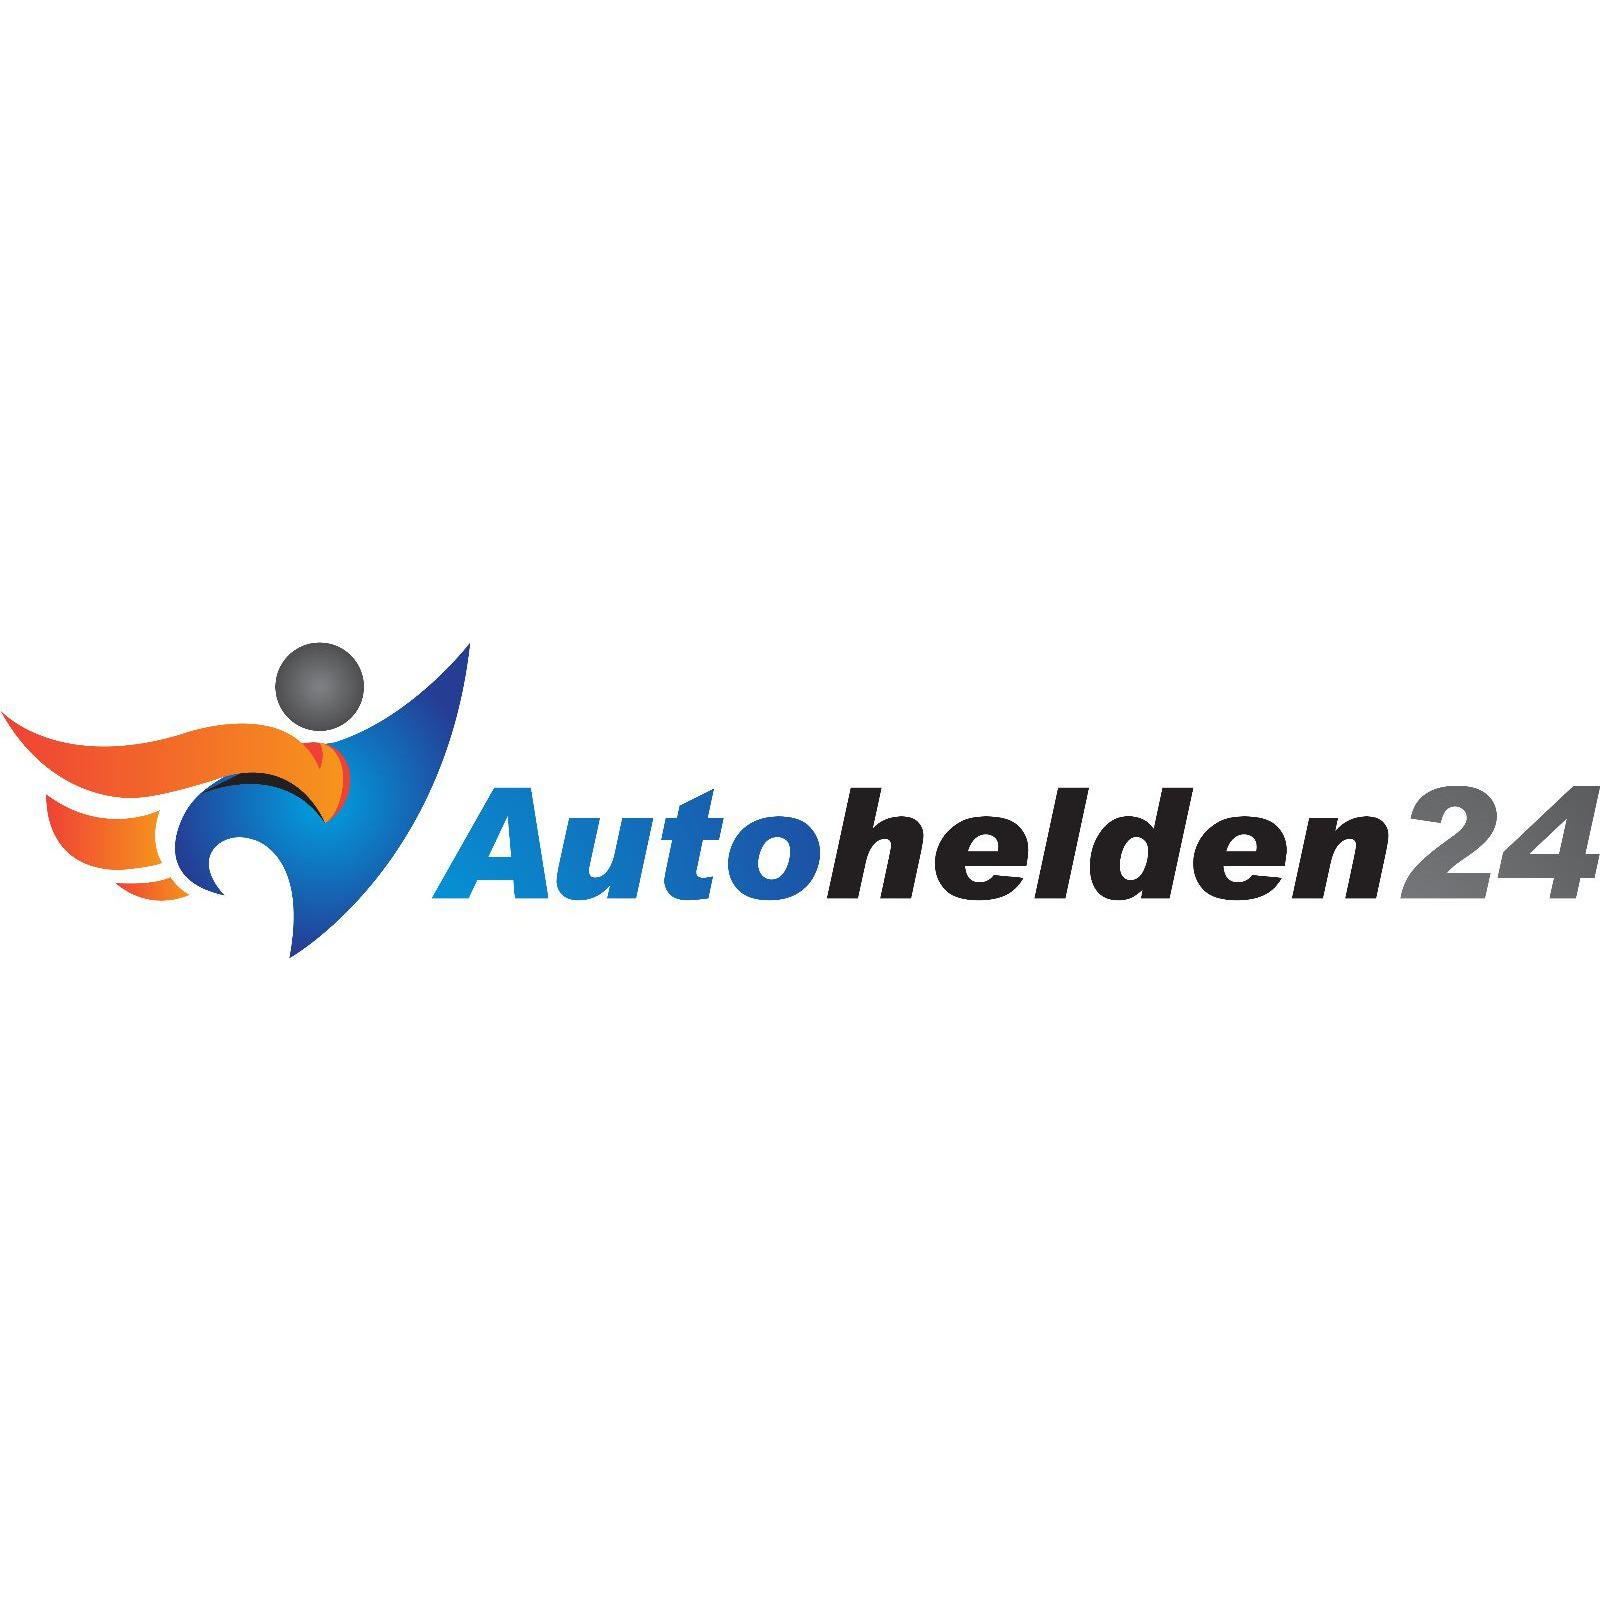 Autohelden24 in Königs Wusterhausen - Logo